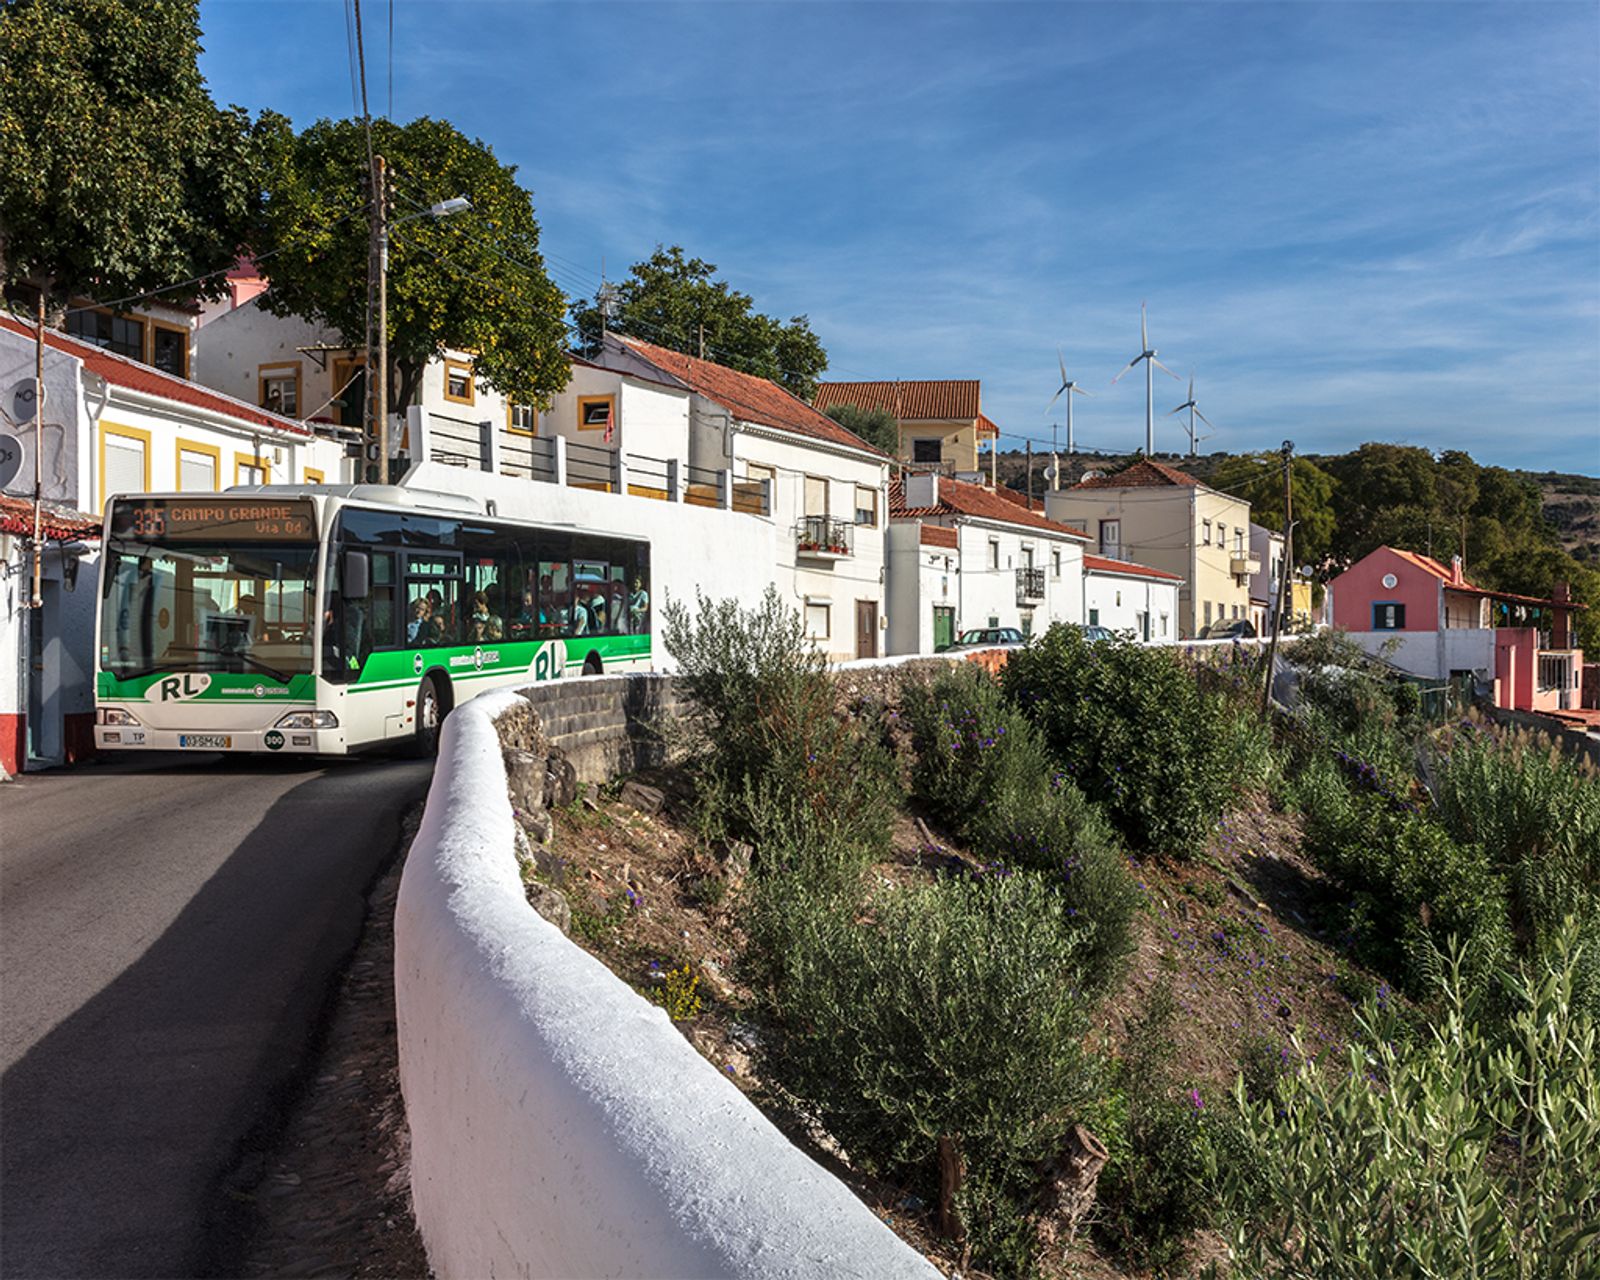 © Bryan Steiff - Bus Stop, Fanhões, Portugal, 2019